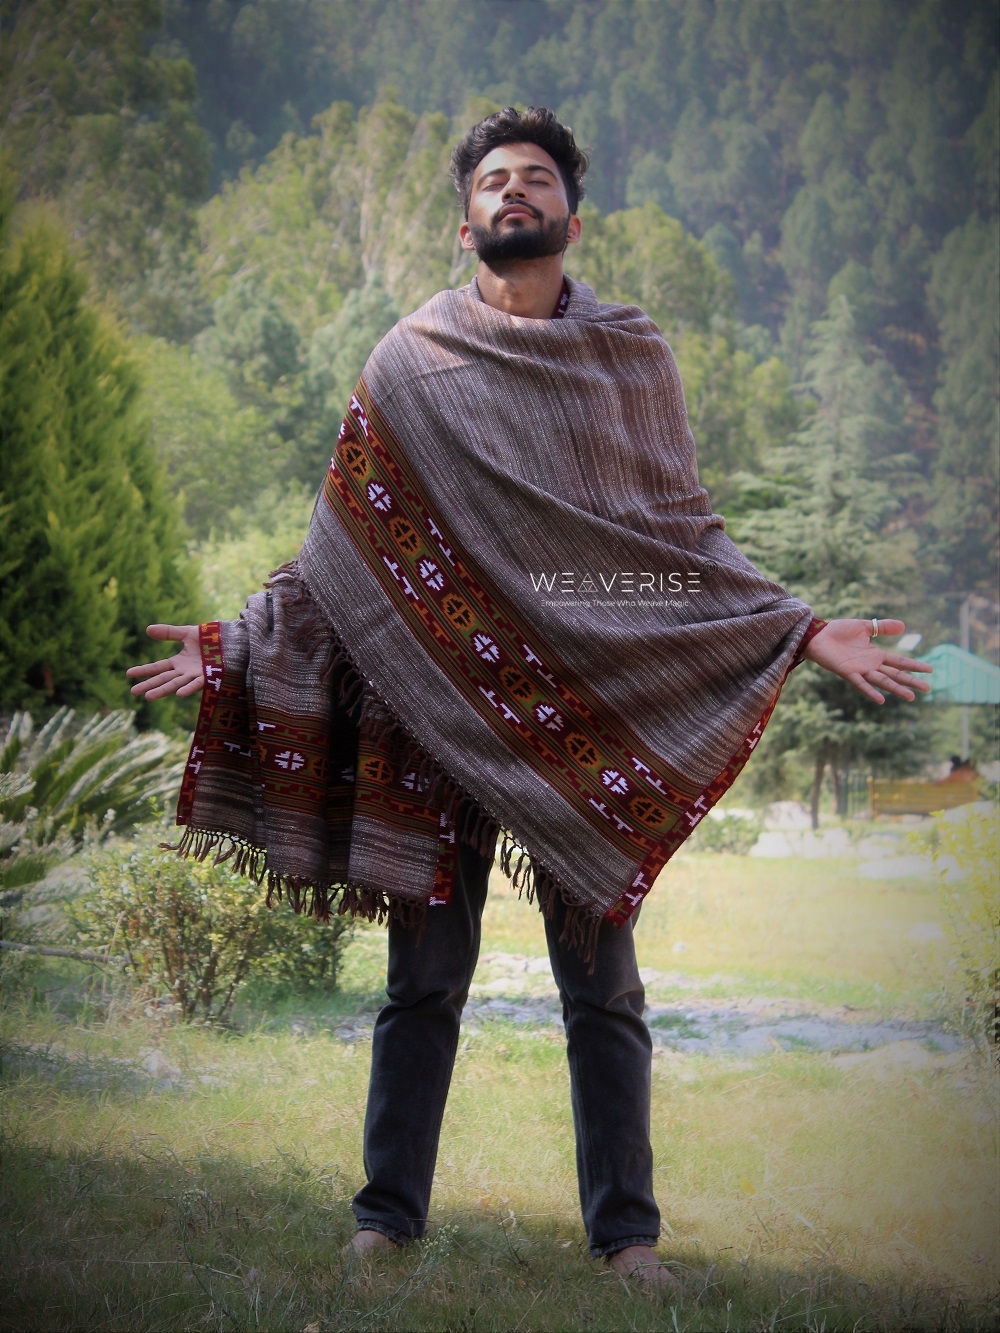 Hand woven Wool Meditation Prayer Scarf Wrap Blanket